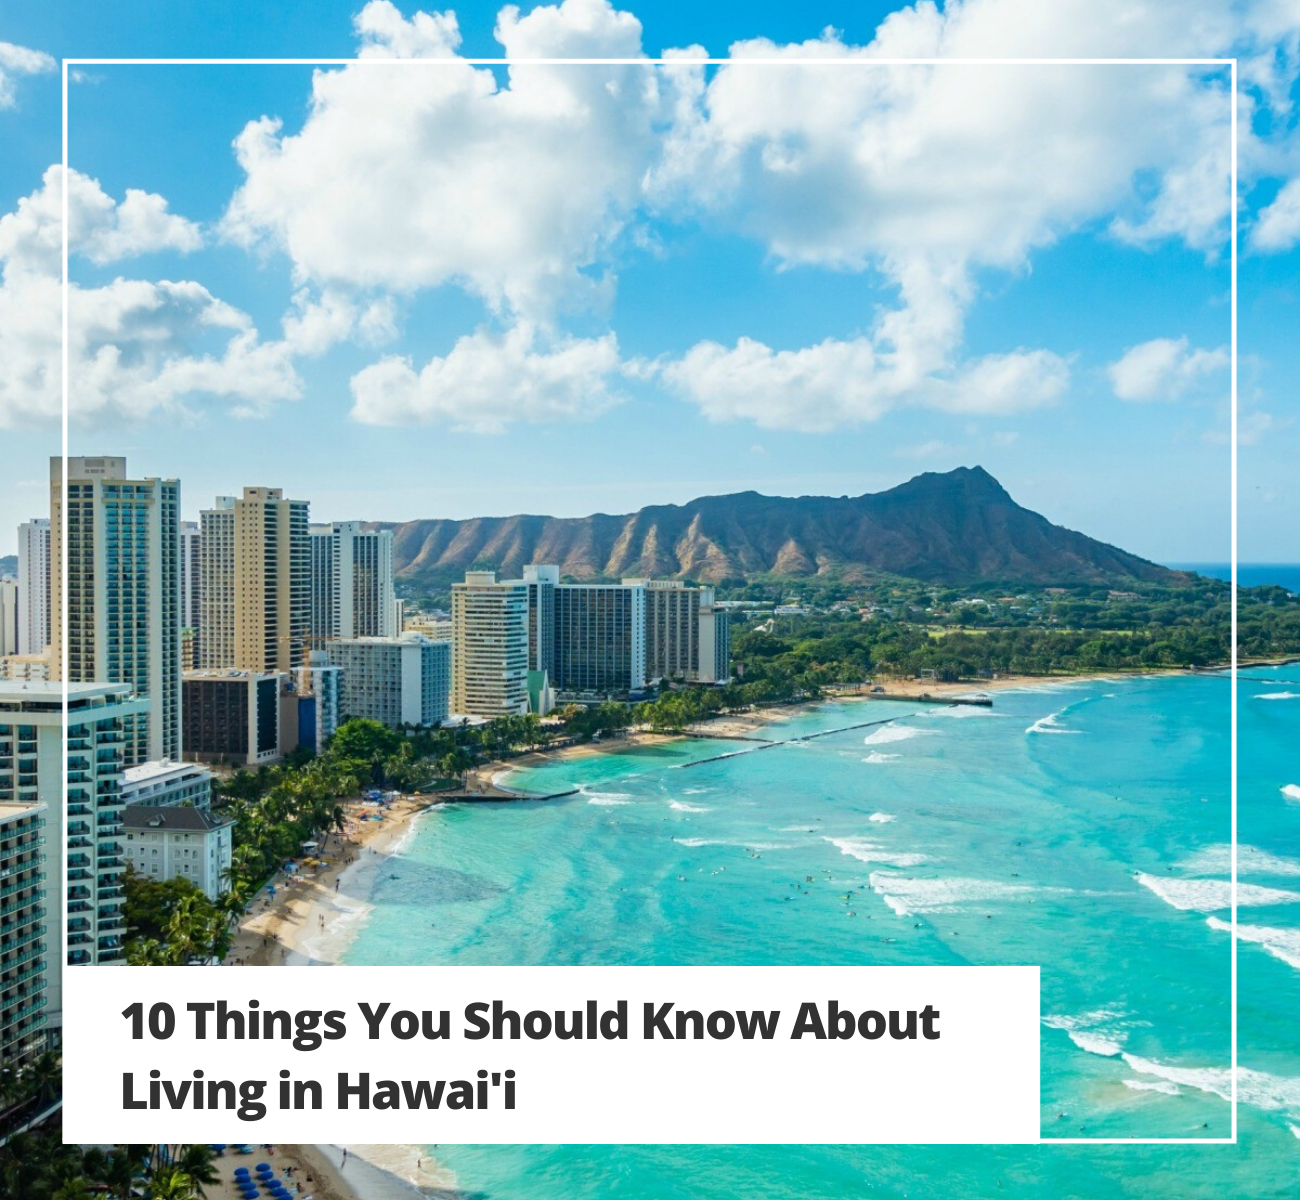 waikiki beach, hawaii, hawaii beach, oahu, living in hawaii, 10 things you should know about living in hawaii, hawaii life